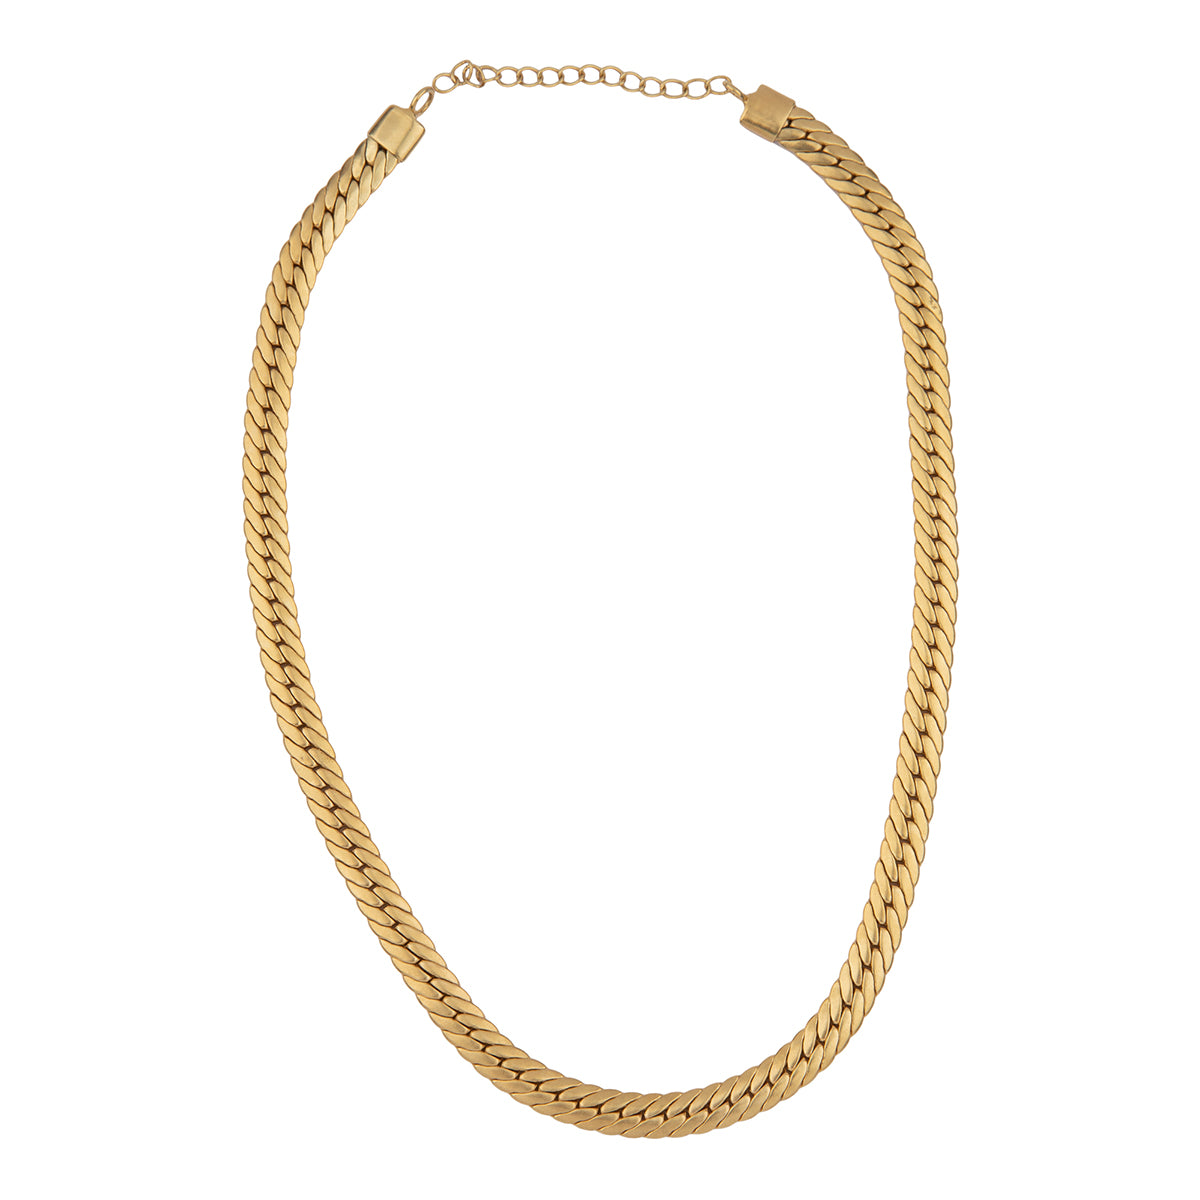 Kian Necklace 48gm 22k Gold Plated Over Brass - ZEWAR Jewelry